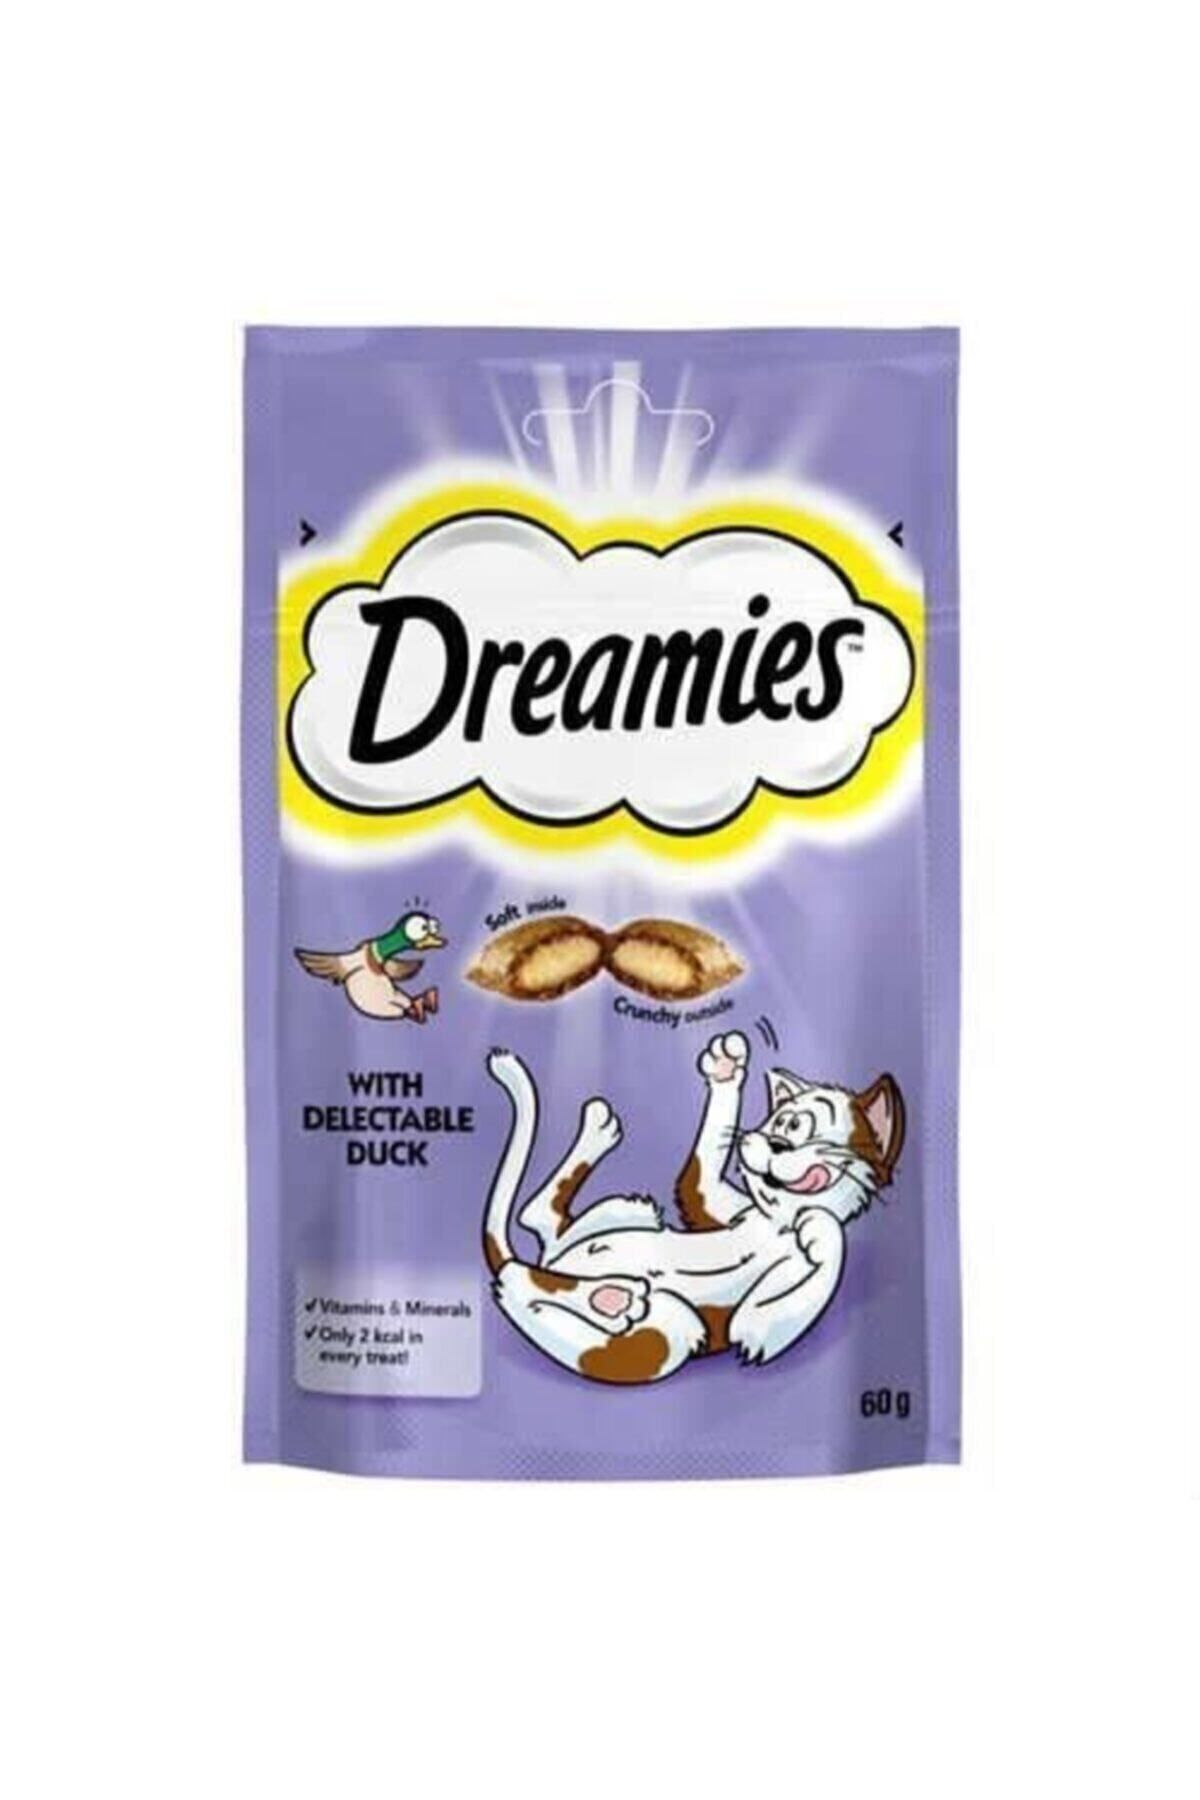 Dreamies Ördekli Kedi Ödül Maması 60 gr